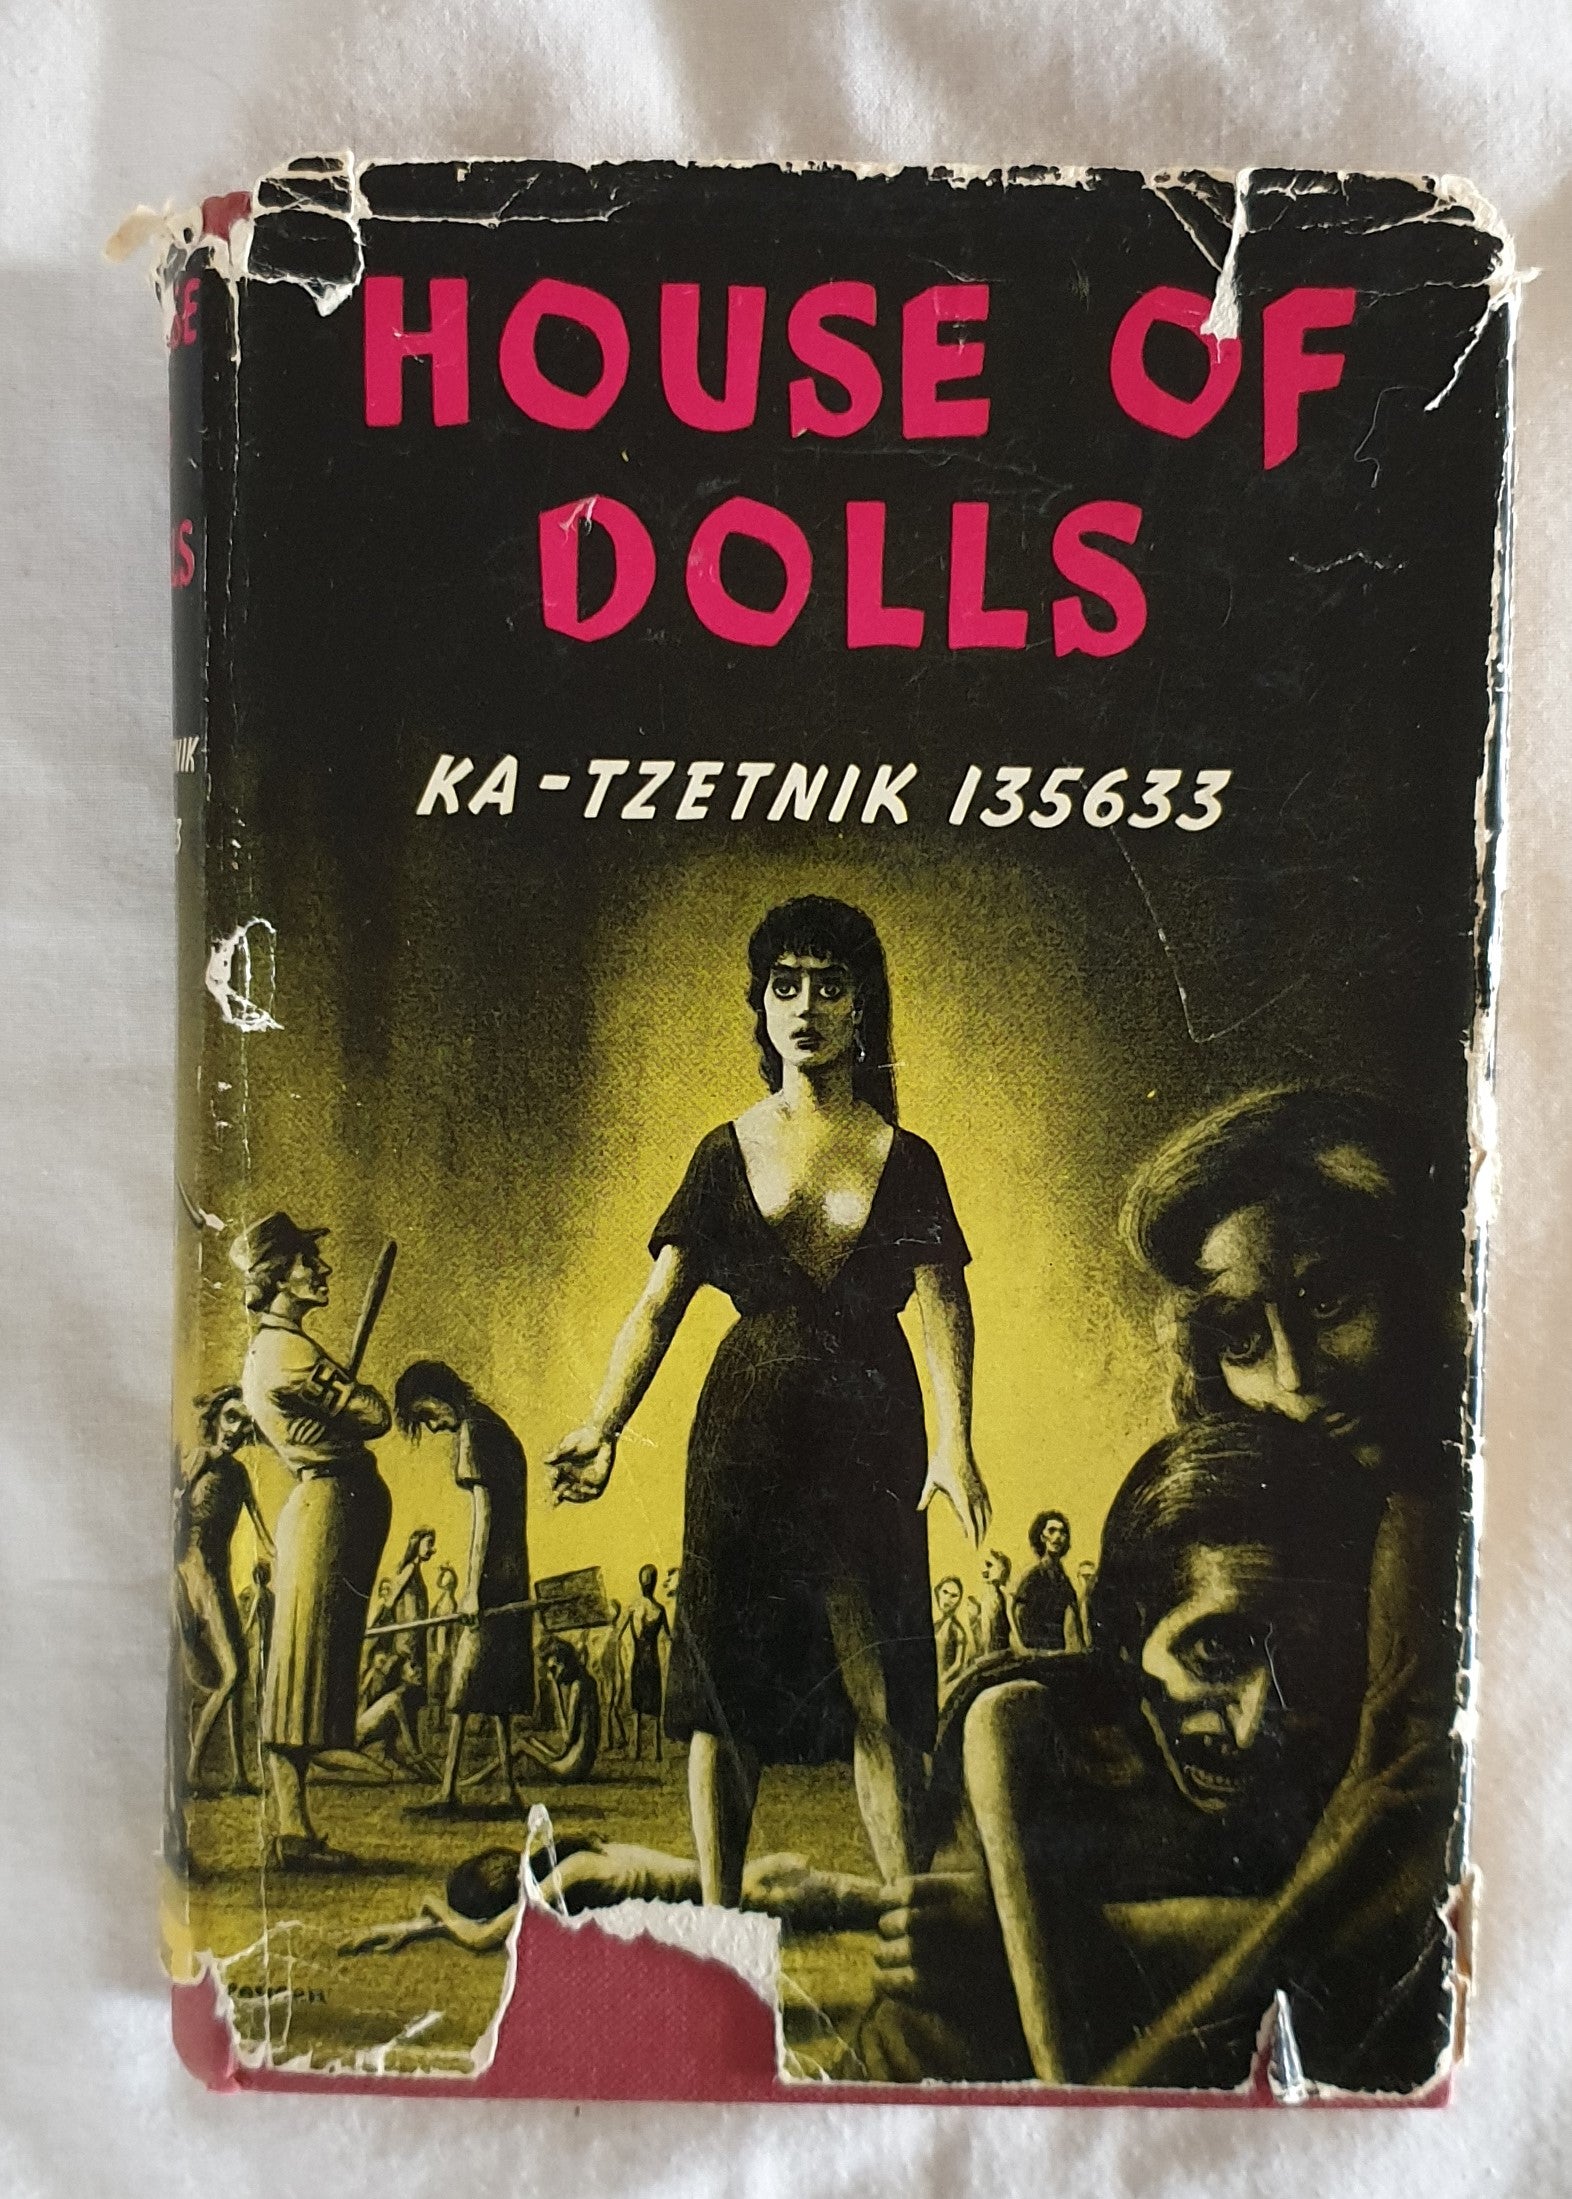 House of Dolls by KA-Tzetnik 135633